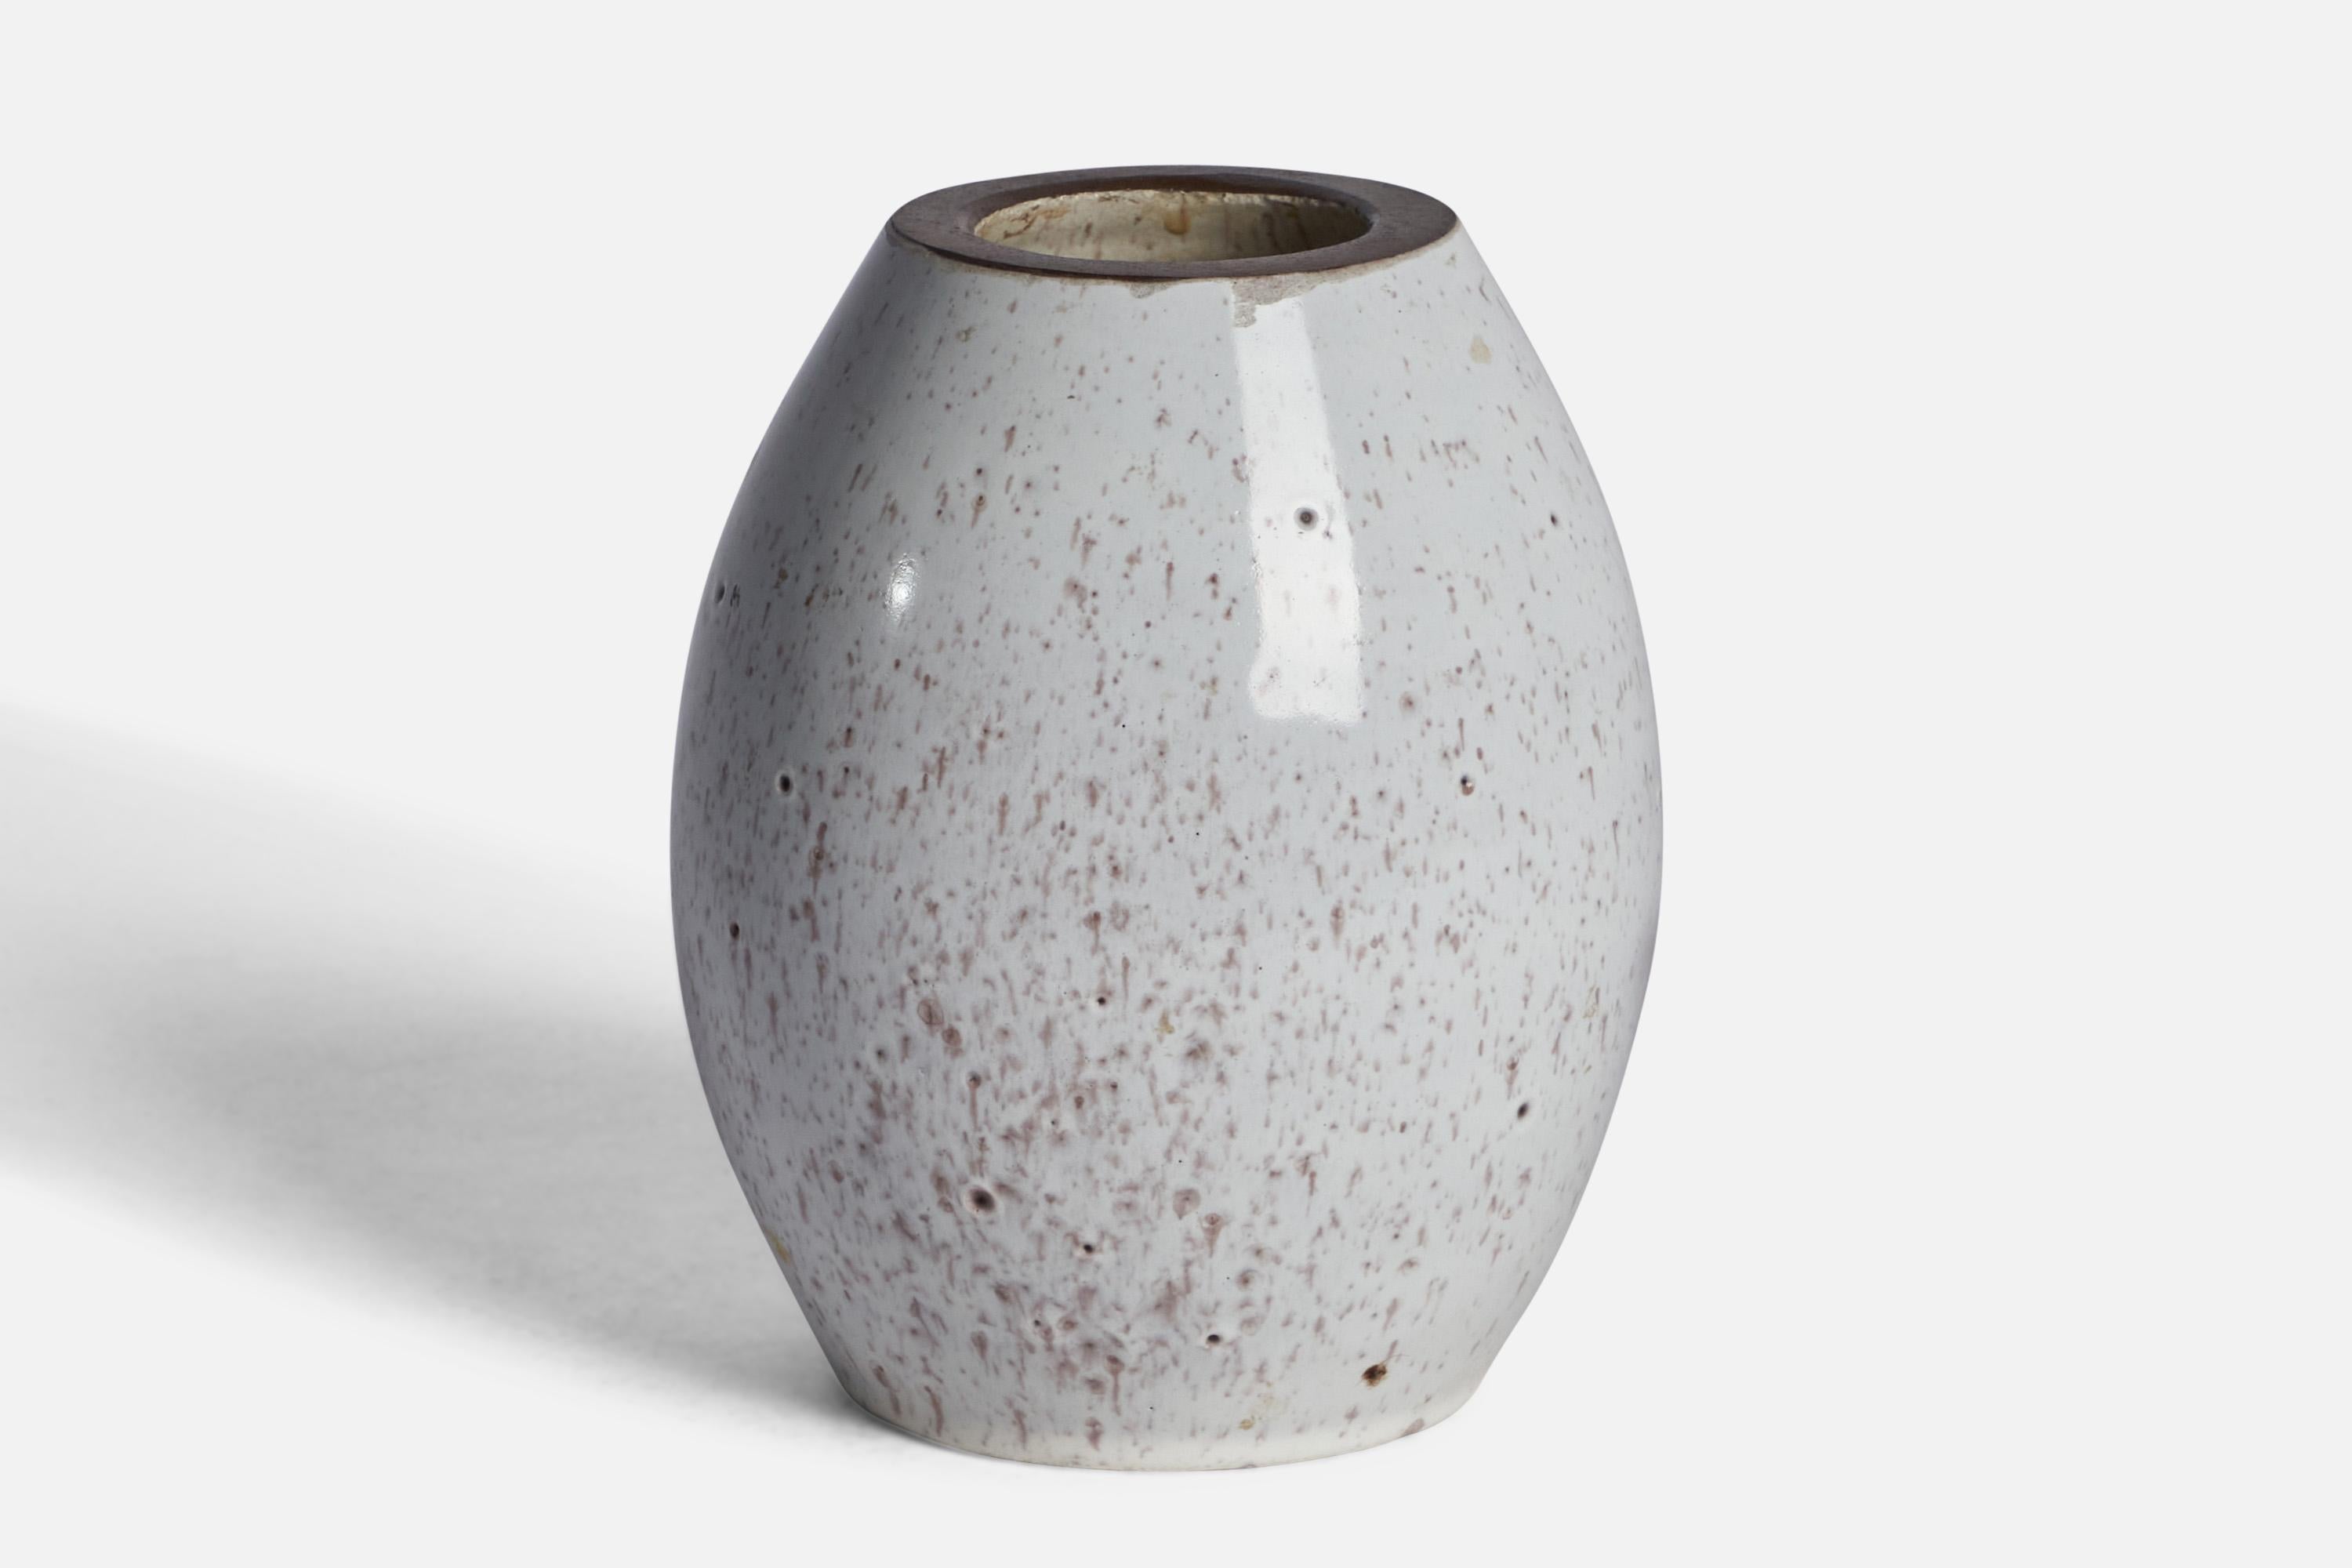 A white-glazed earthenware vase designed and produced by Upsala Ekeby, Sweden, c. 1940s.